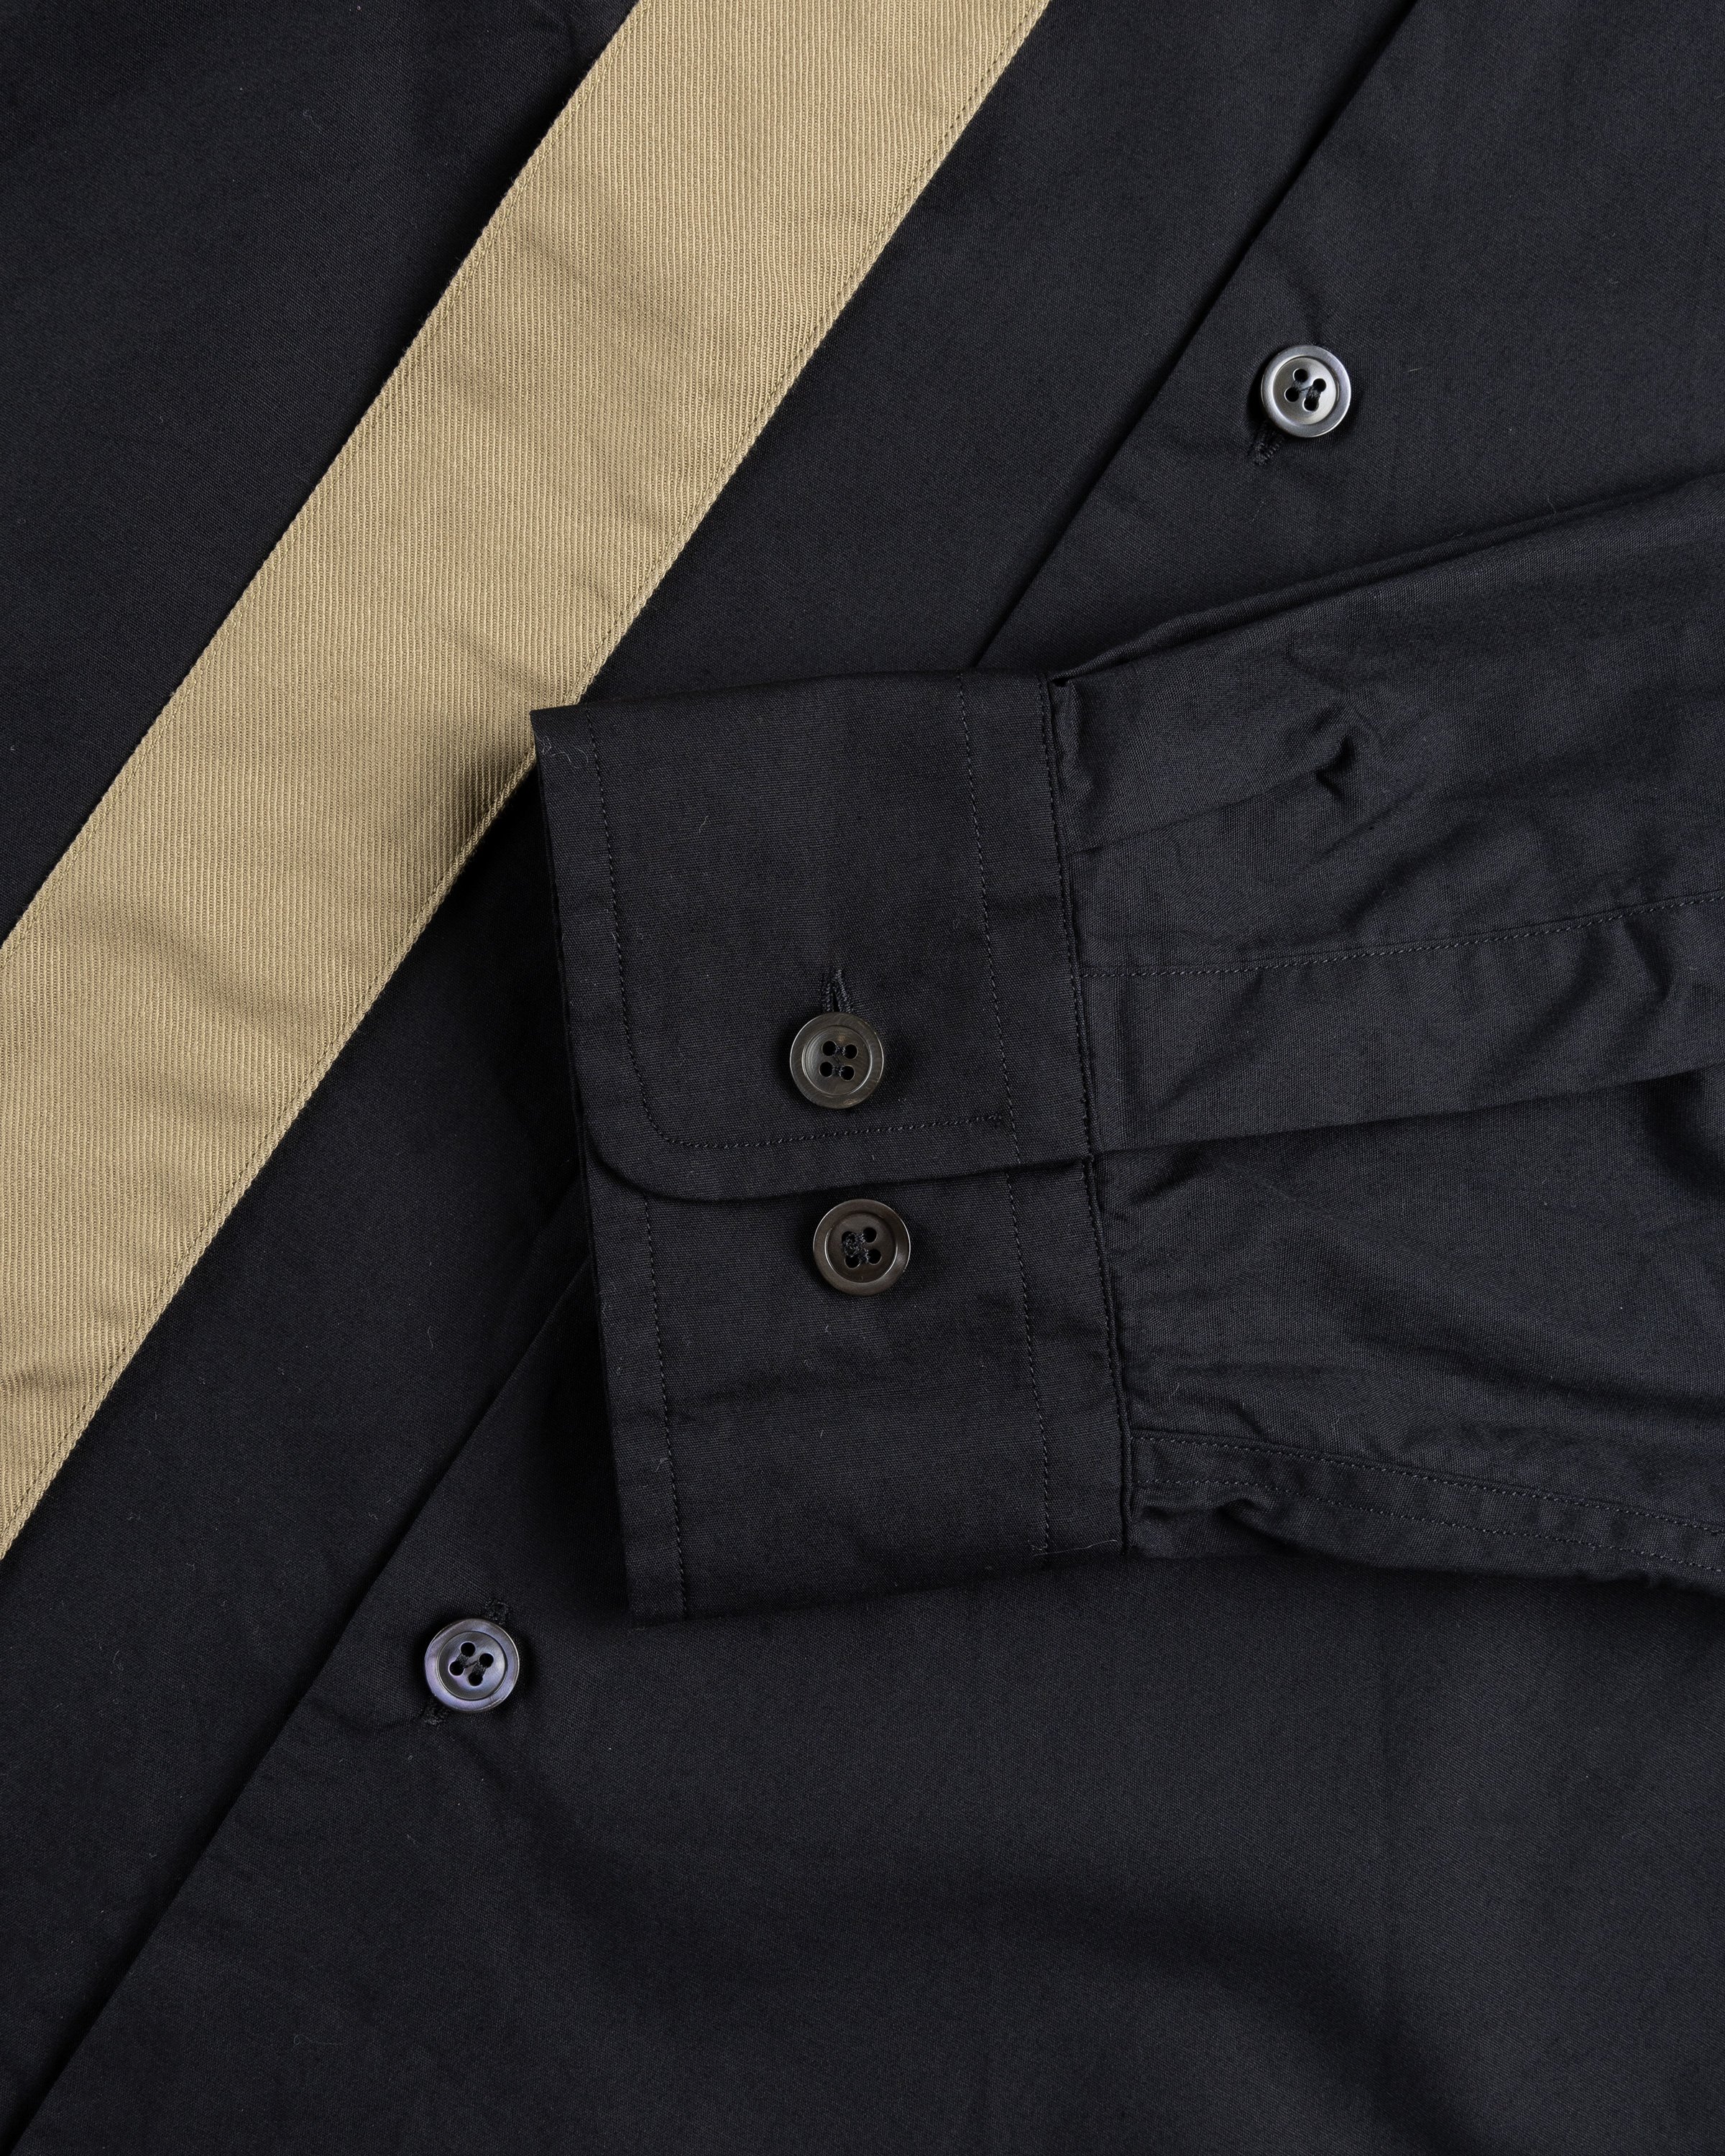 Dries van Noten - Croom Bis Shirt Black - Clothing - Black - Image 6